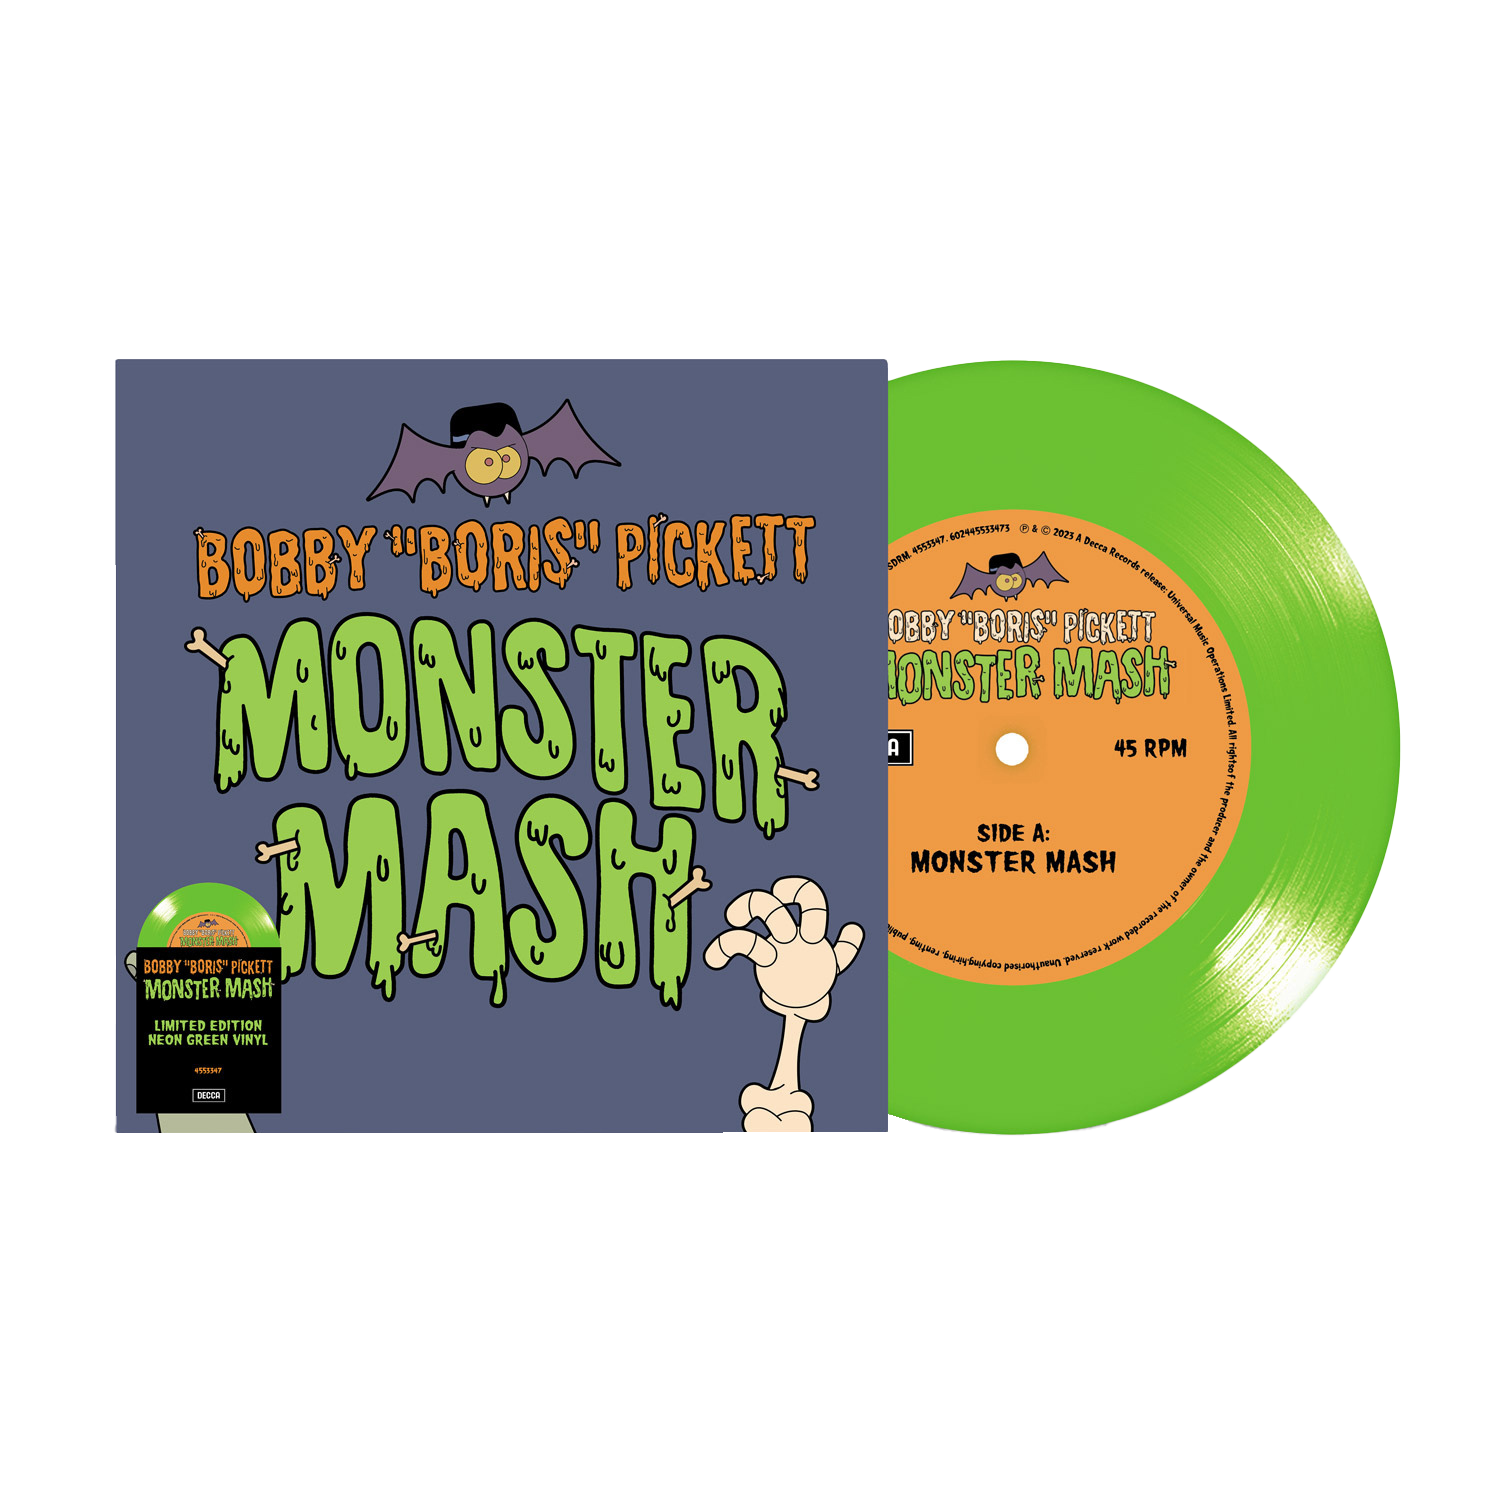 Bobby "Boris" Pickett - Monster Mash: Vinyl 7" Single